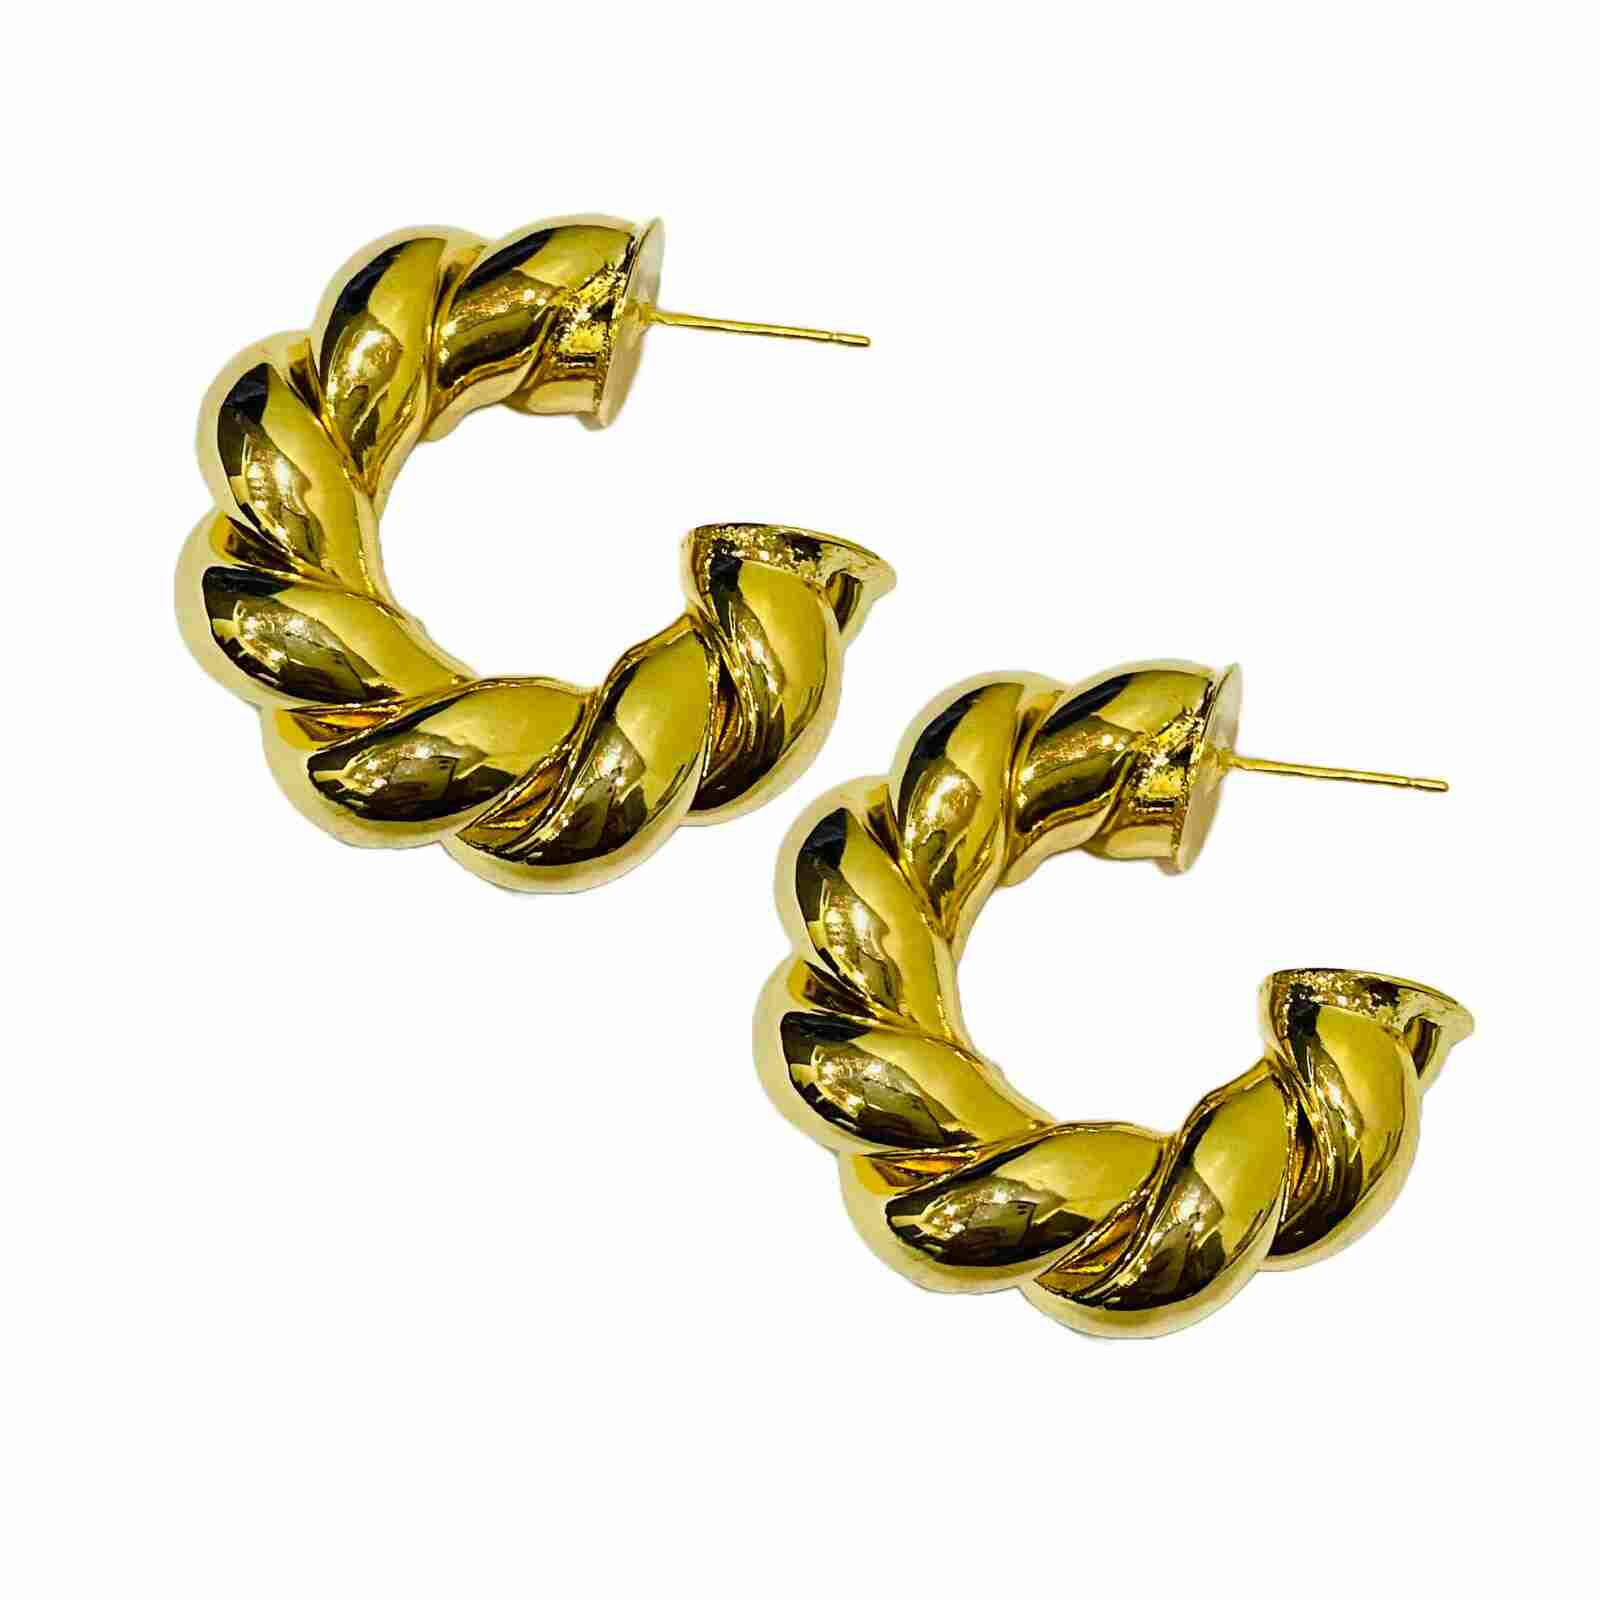 Fancy Gold Plated Basket Earrings or V Shape Gold Plated Earrings or Hoop  Gold Earrings For